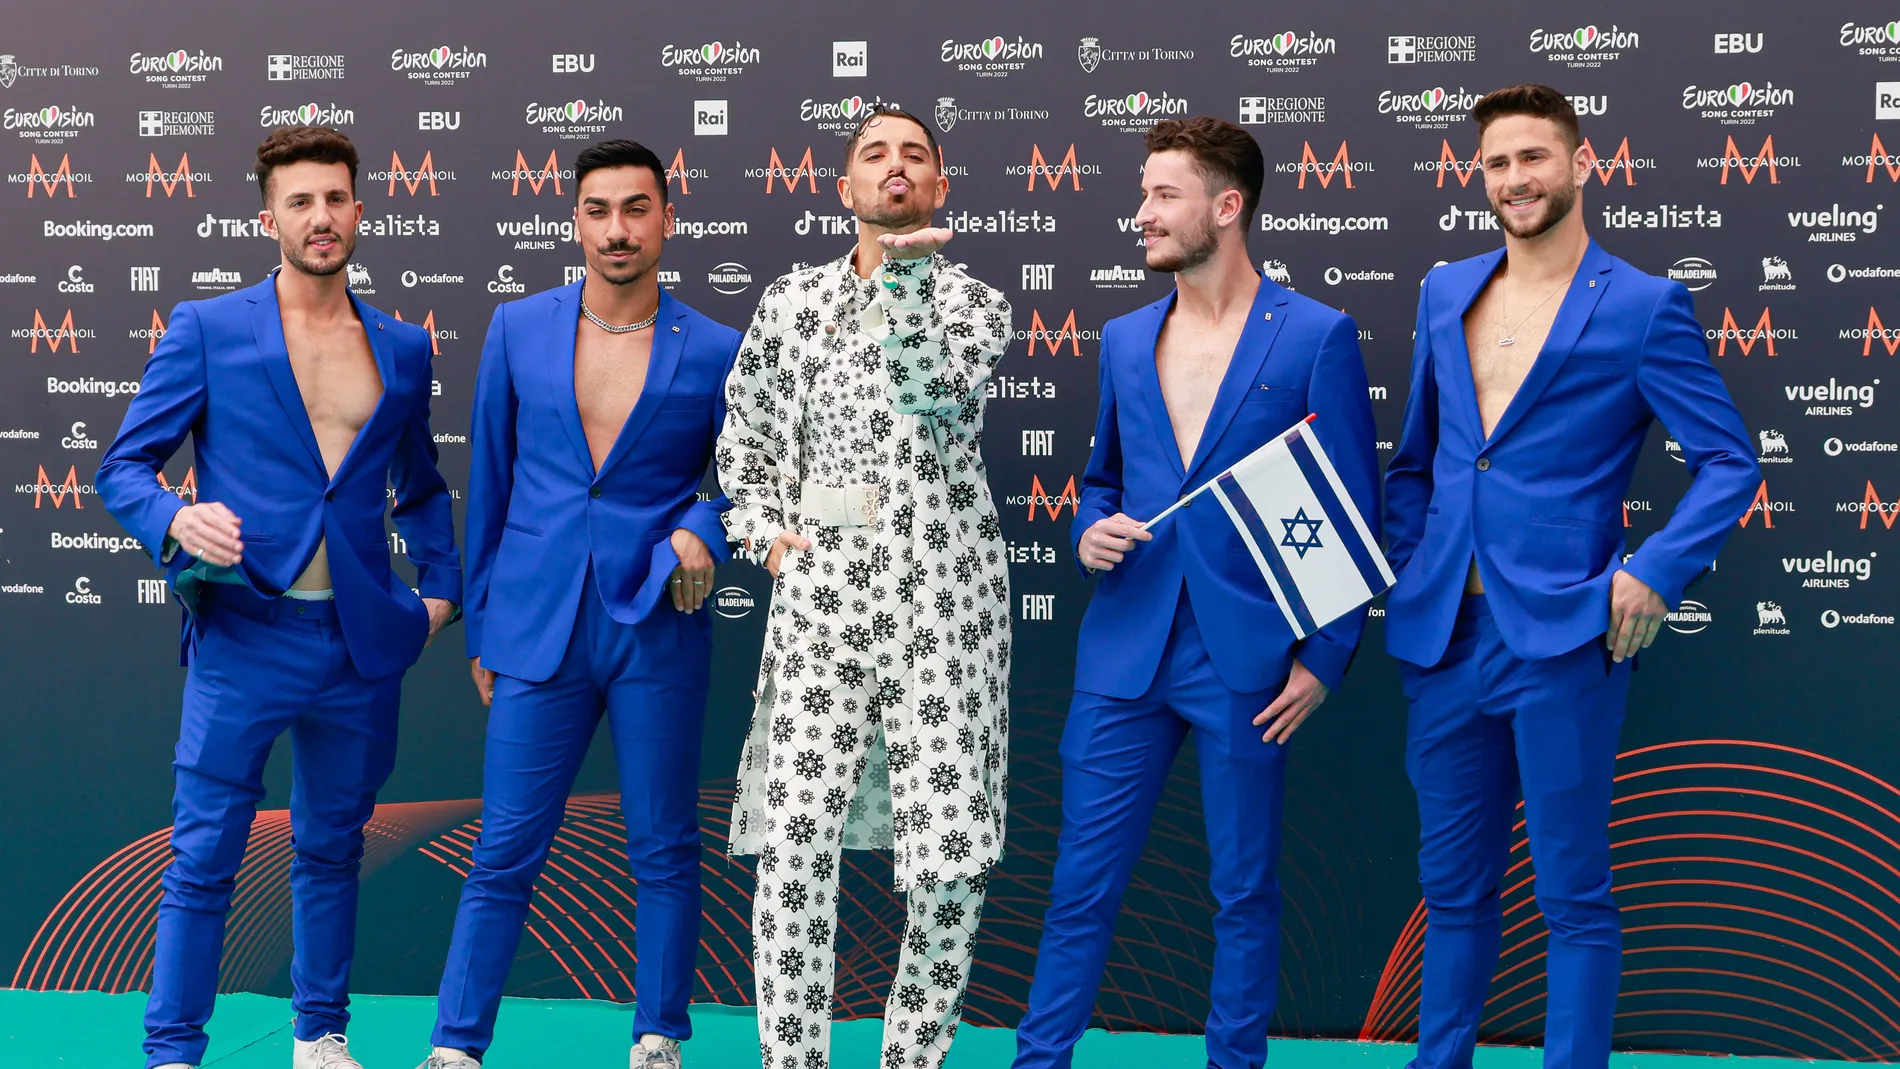 Cuantos actuan en eurovision